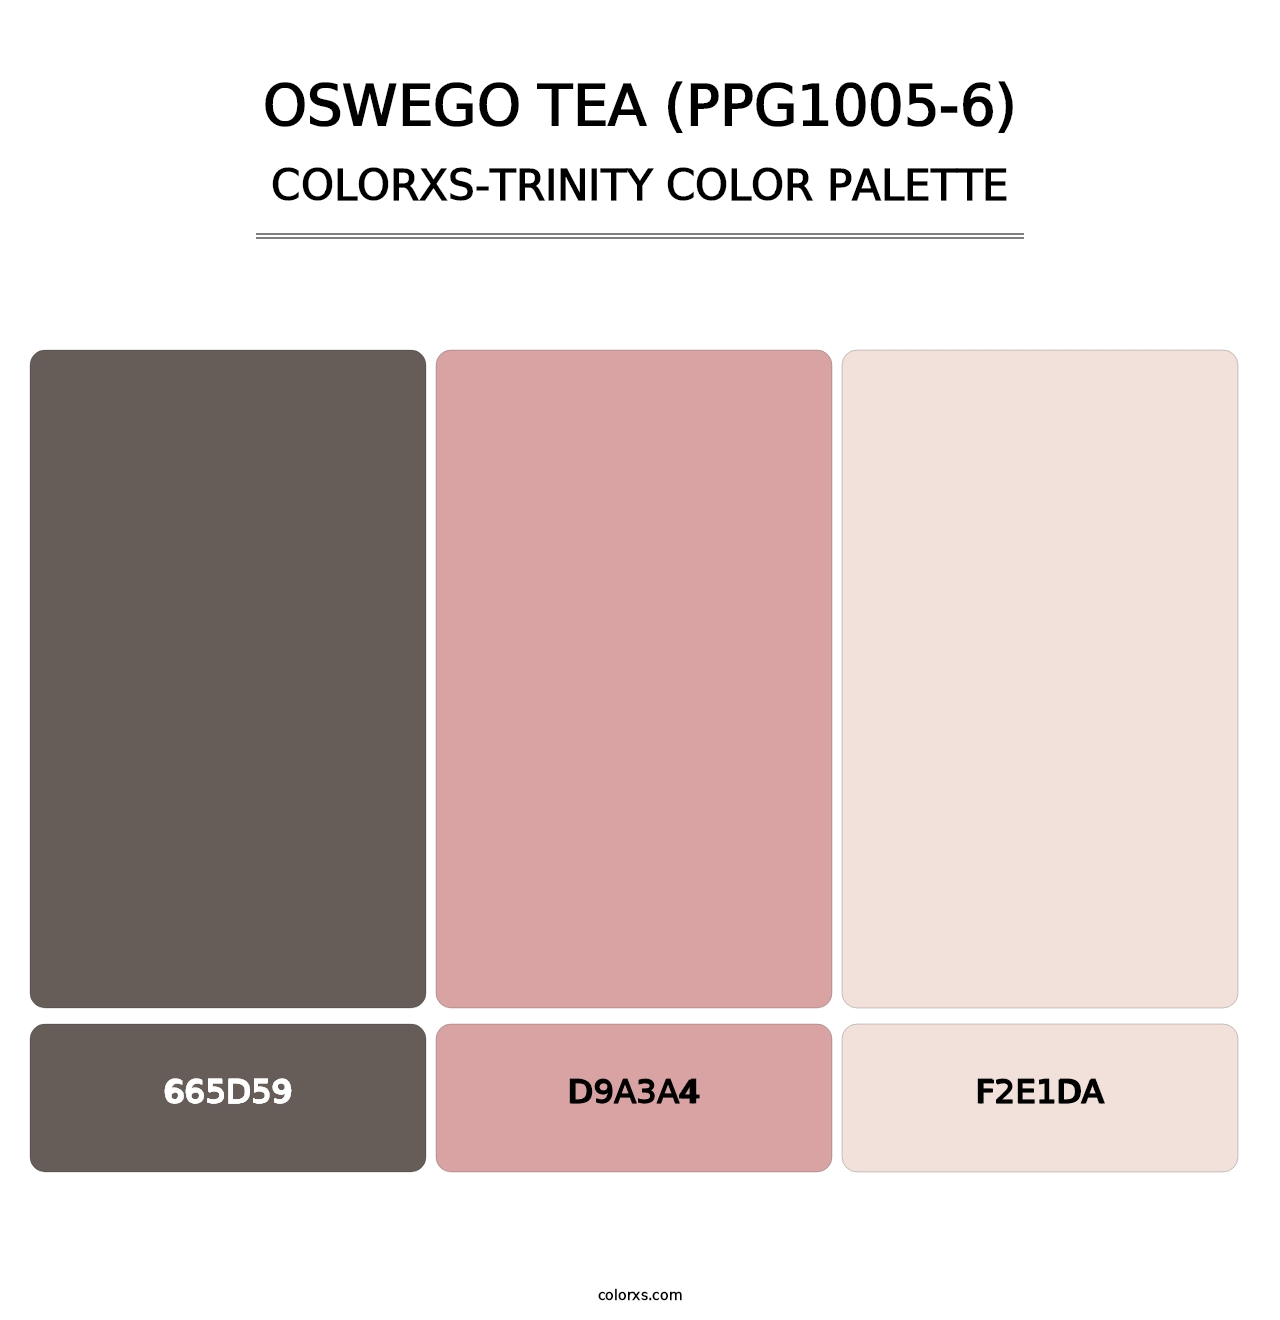 Oswego Tea (PPG1005-6) - Colorxs Trinity Palette